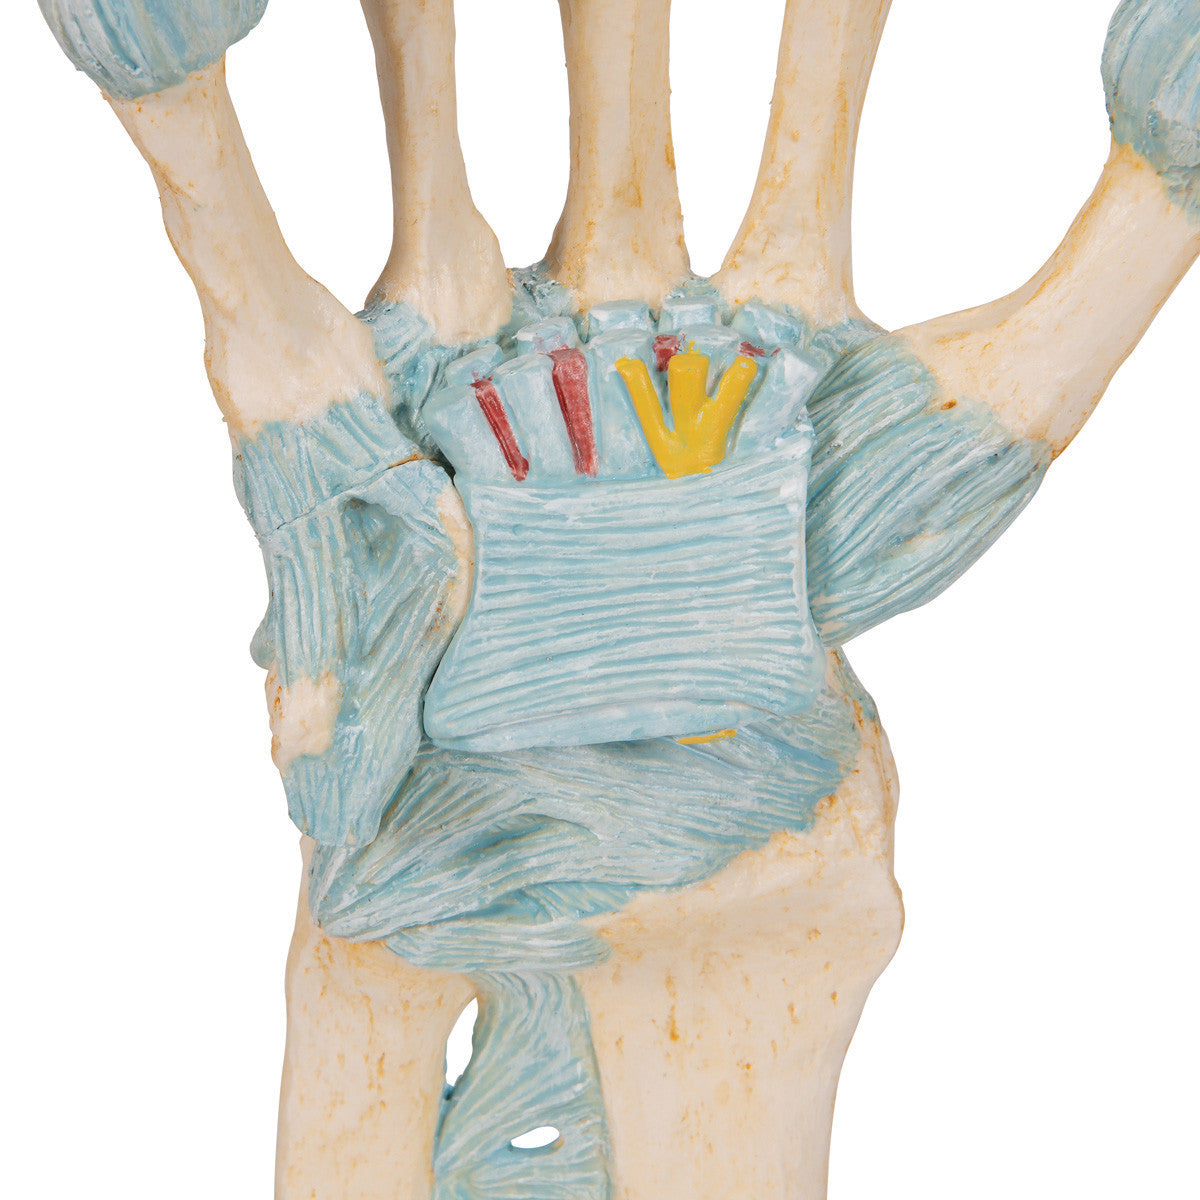 m33_07_1200_1200_hand-skeleton-model-with-ligaments-carpal-tunnel-3b-smart-anatomy__41852.1589753042.1280.1280.jpg